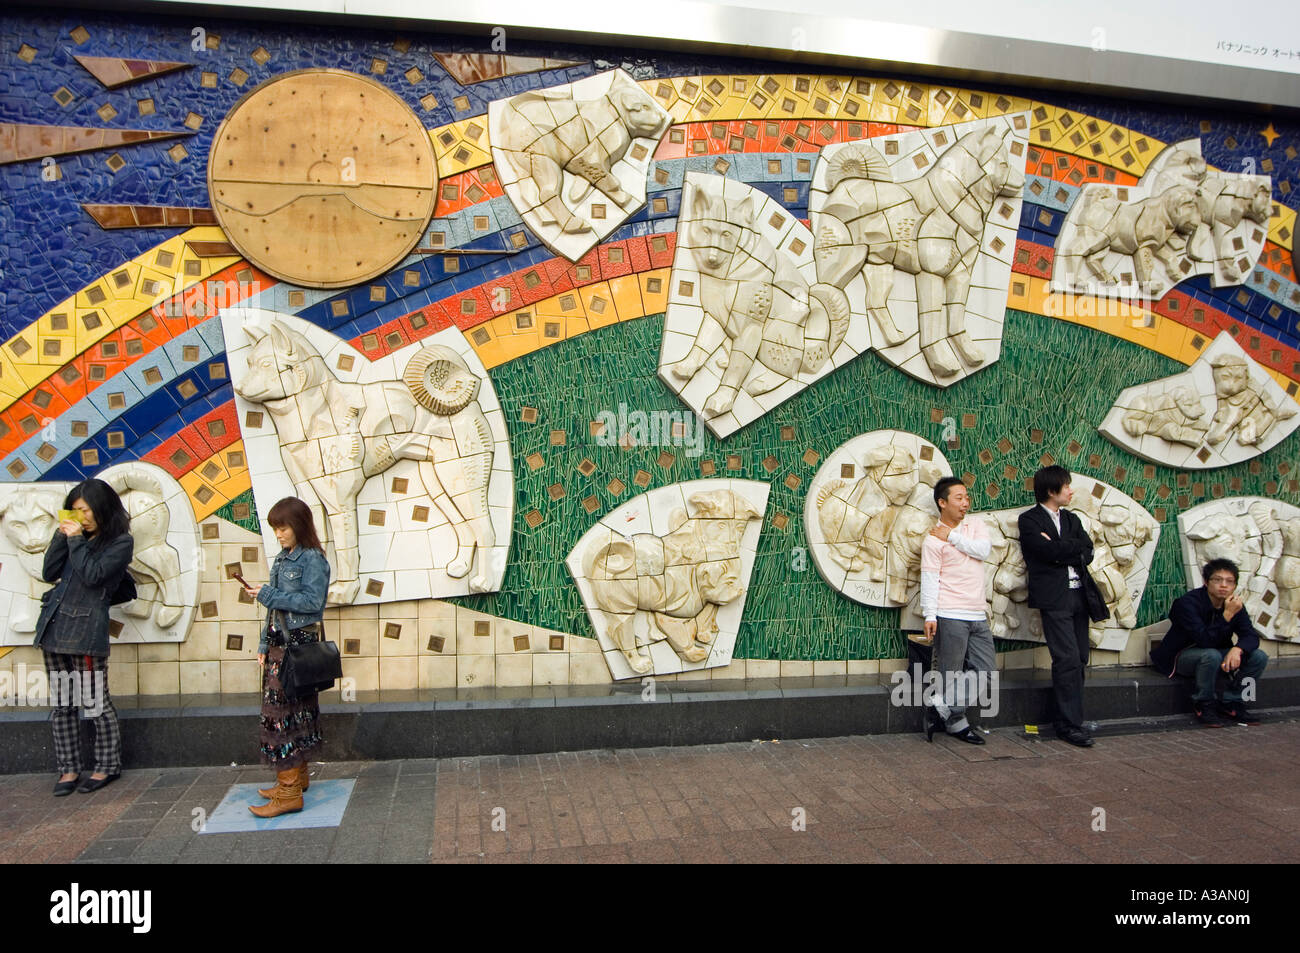 people waiting by Hachiko Dog wall mural Shibuya Tokyo Japan Asia Stock Photo